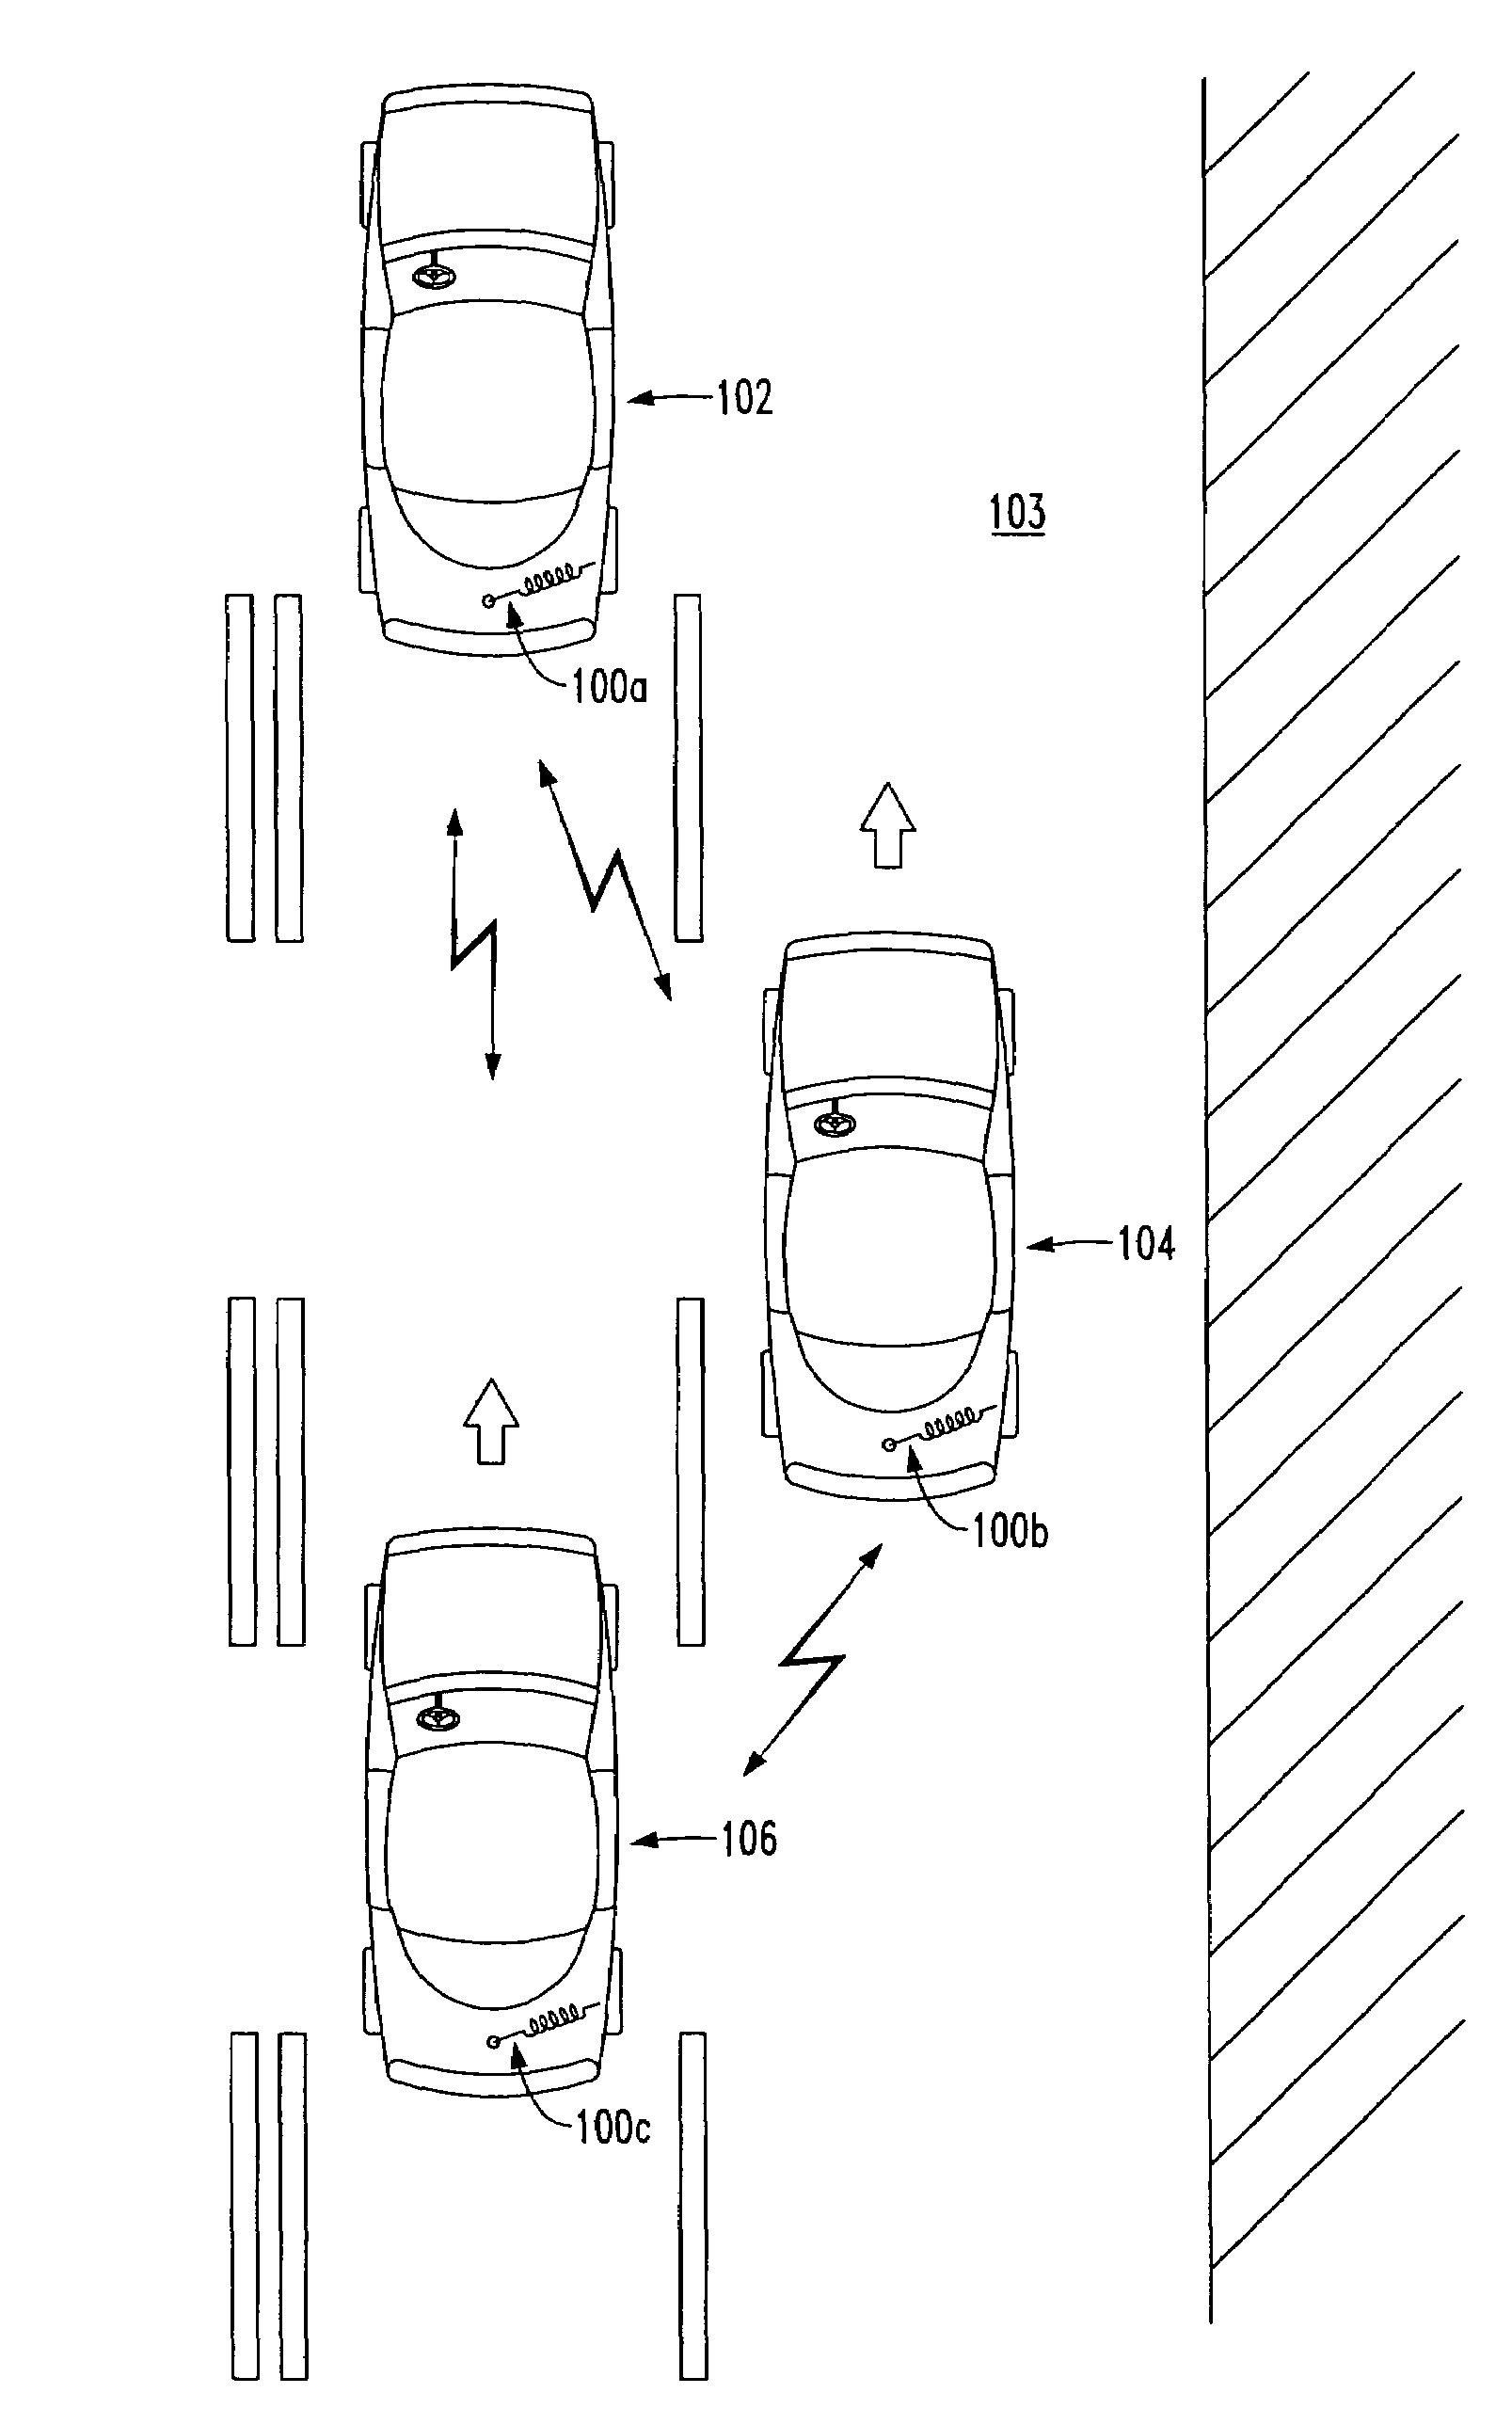 Vehicle interaction communication system